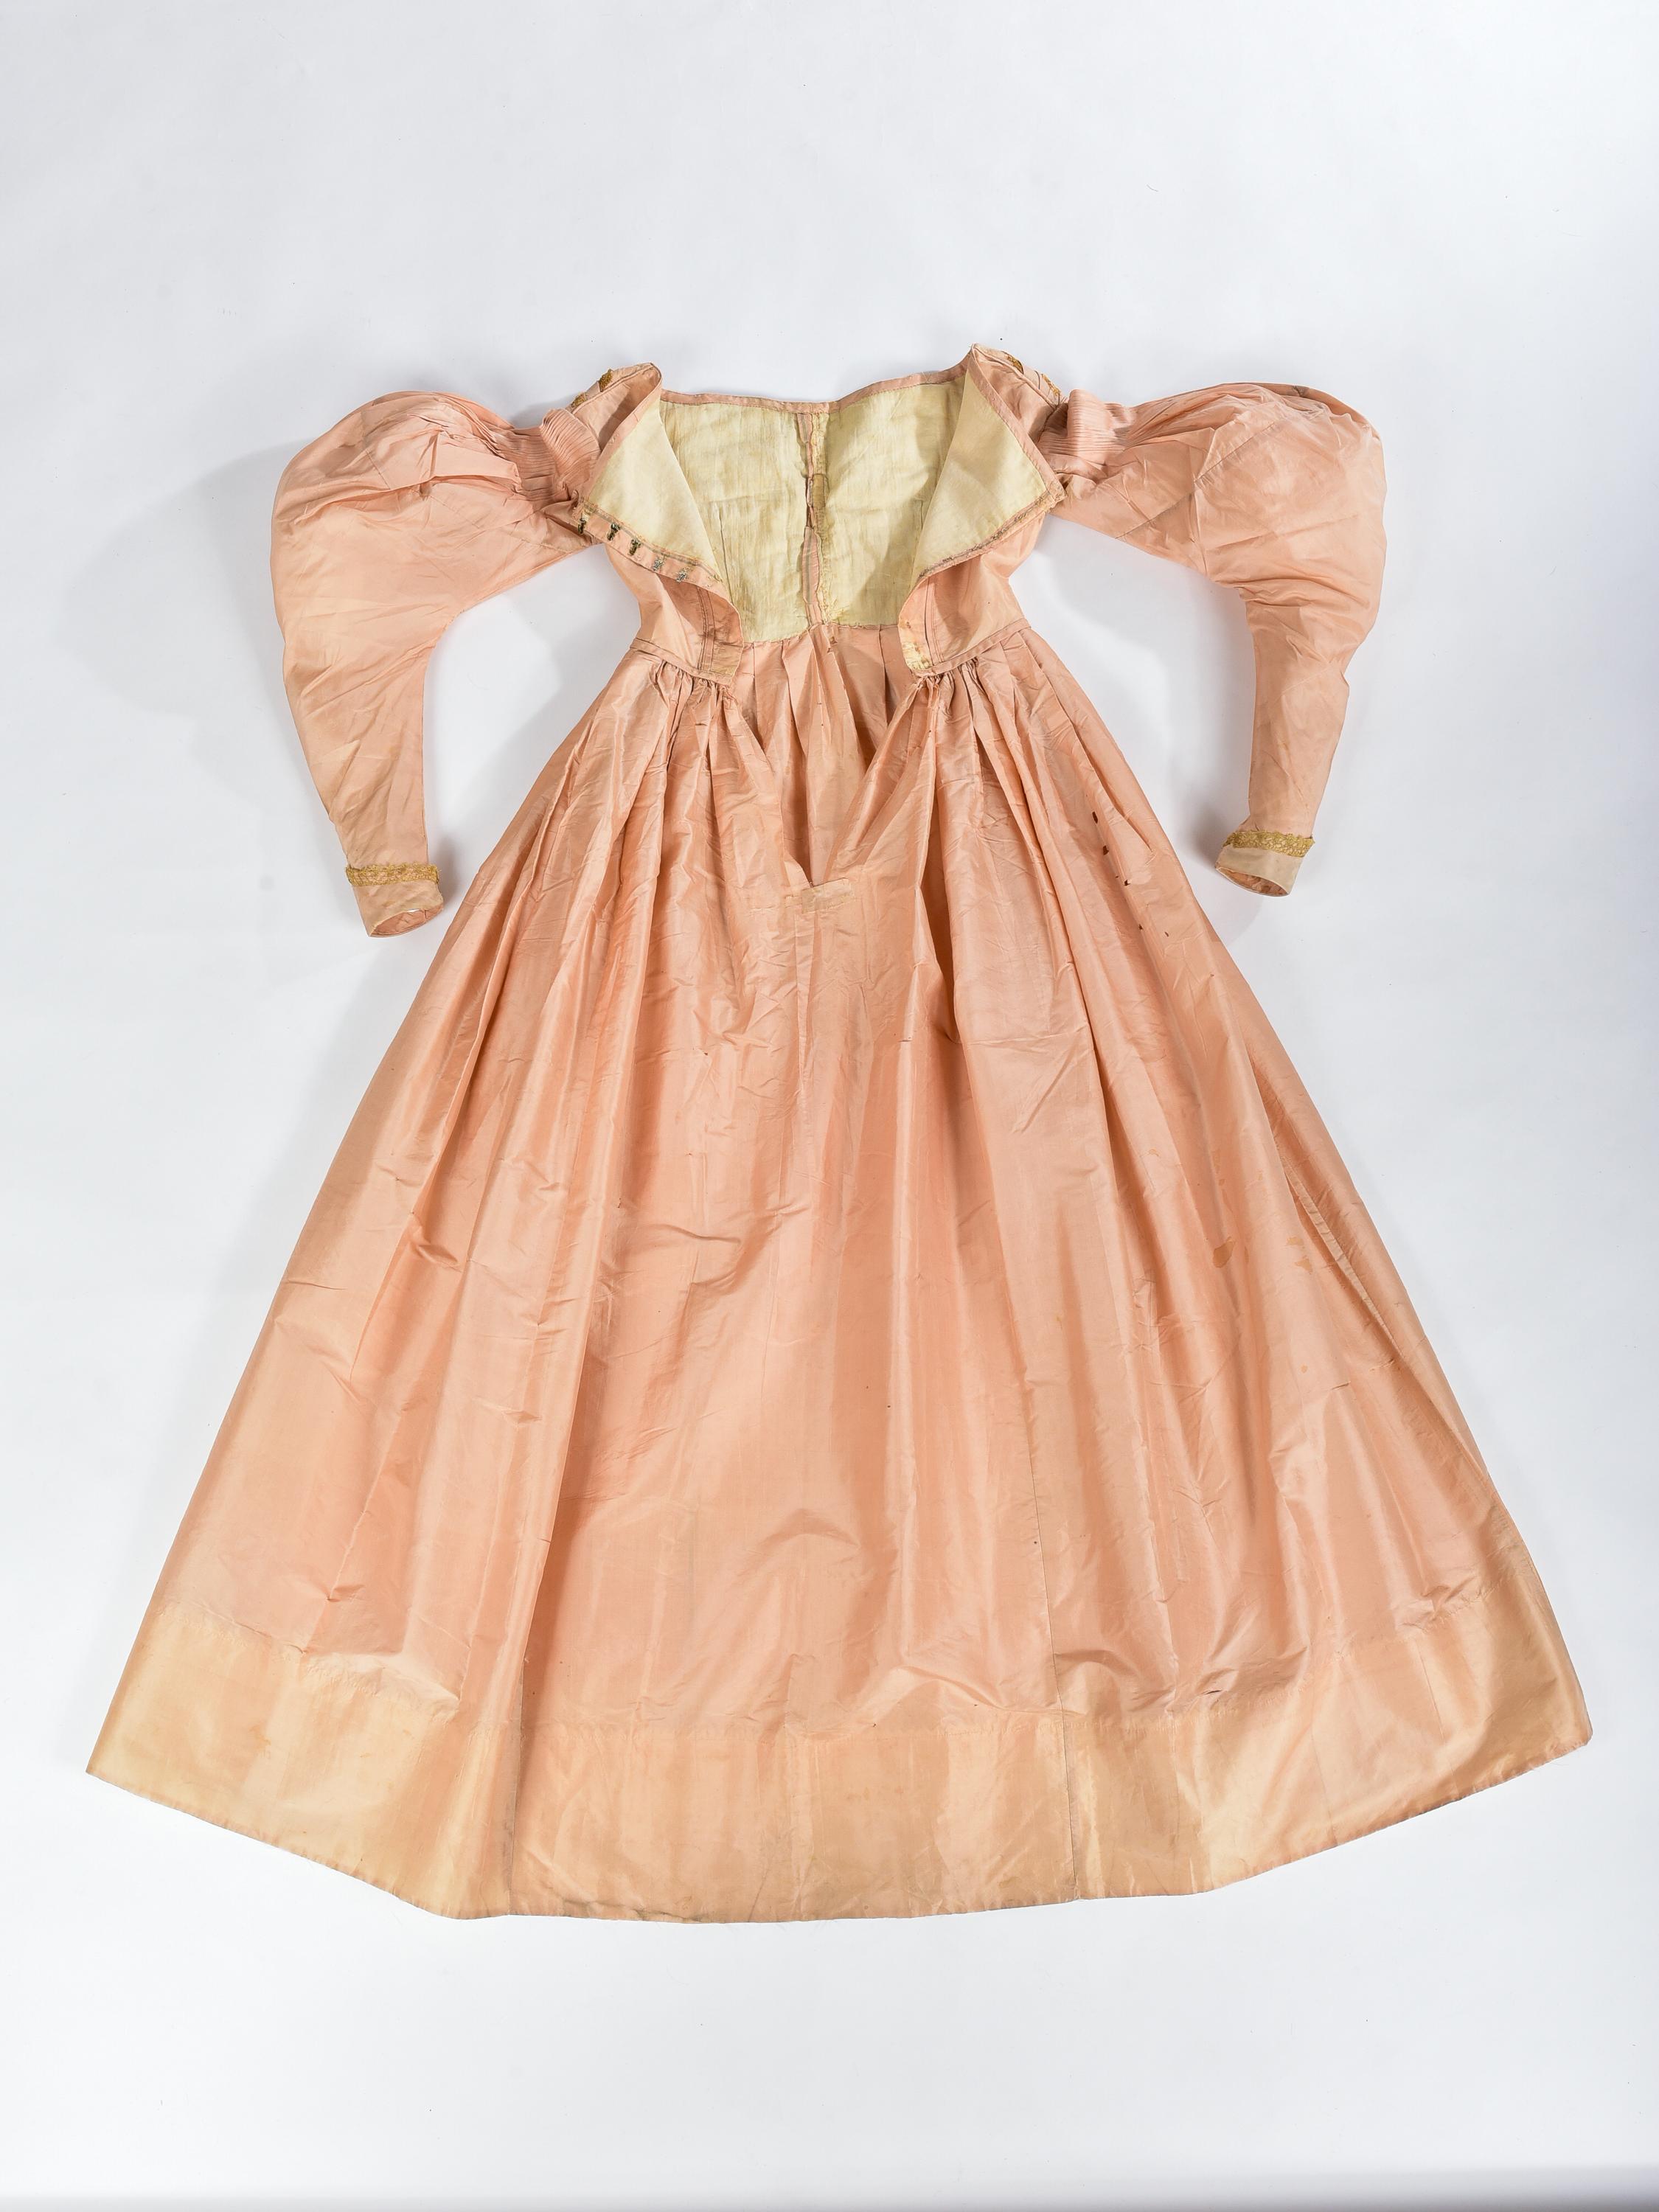 Women's A French Romantic Period taffeta pale pink Taffeta Dress- France Circa 1835-1840